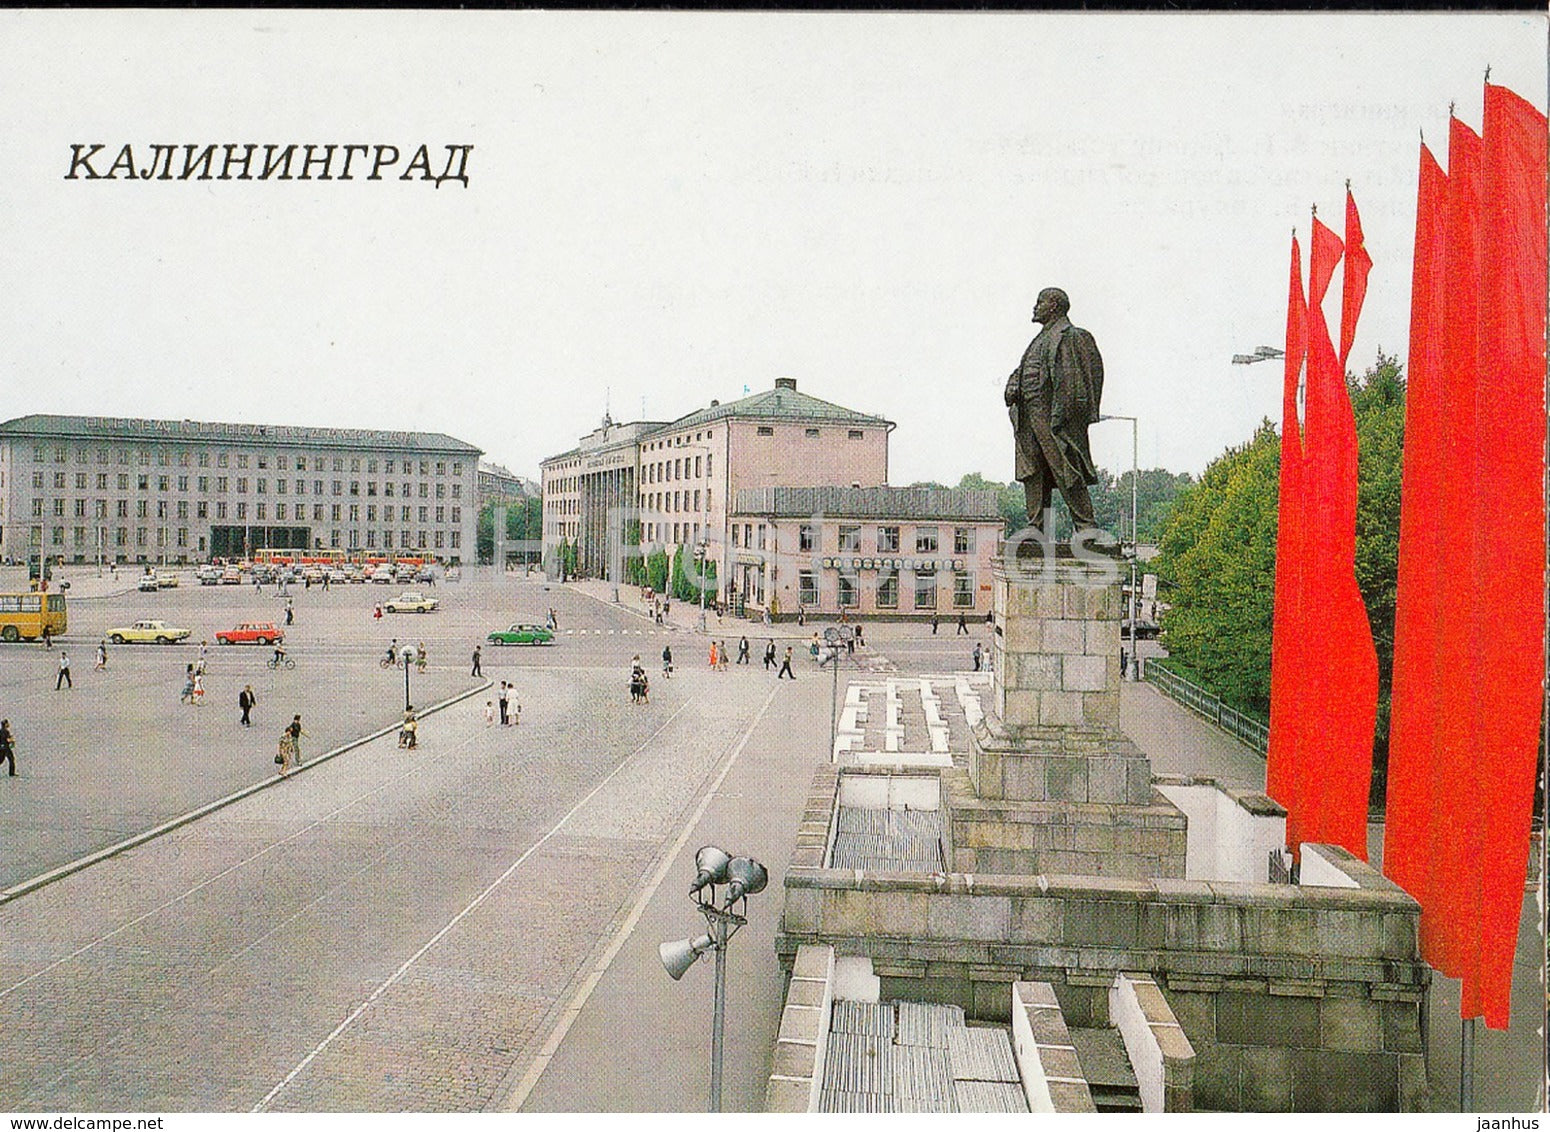 Kaliningrad - Konigsberg - monument to Lenin at Victory square - 1987 - Russia USSR - unused - JH Postcards